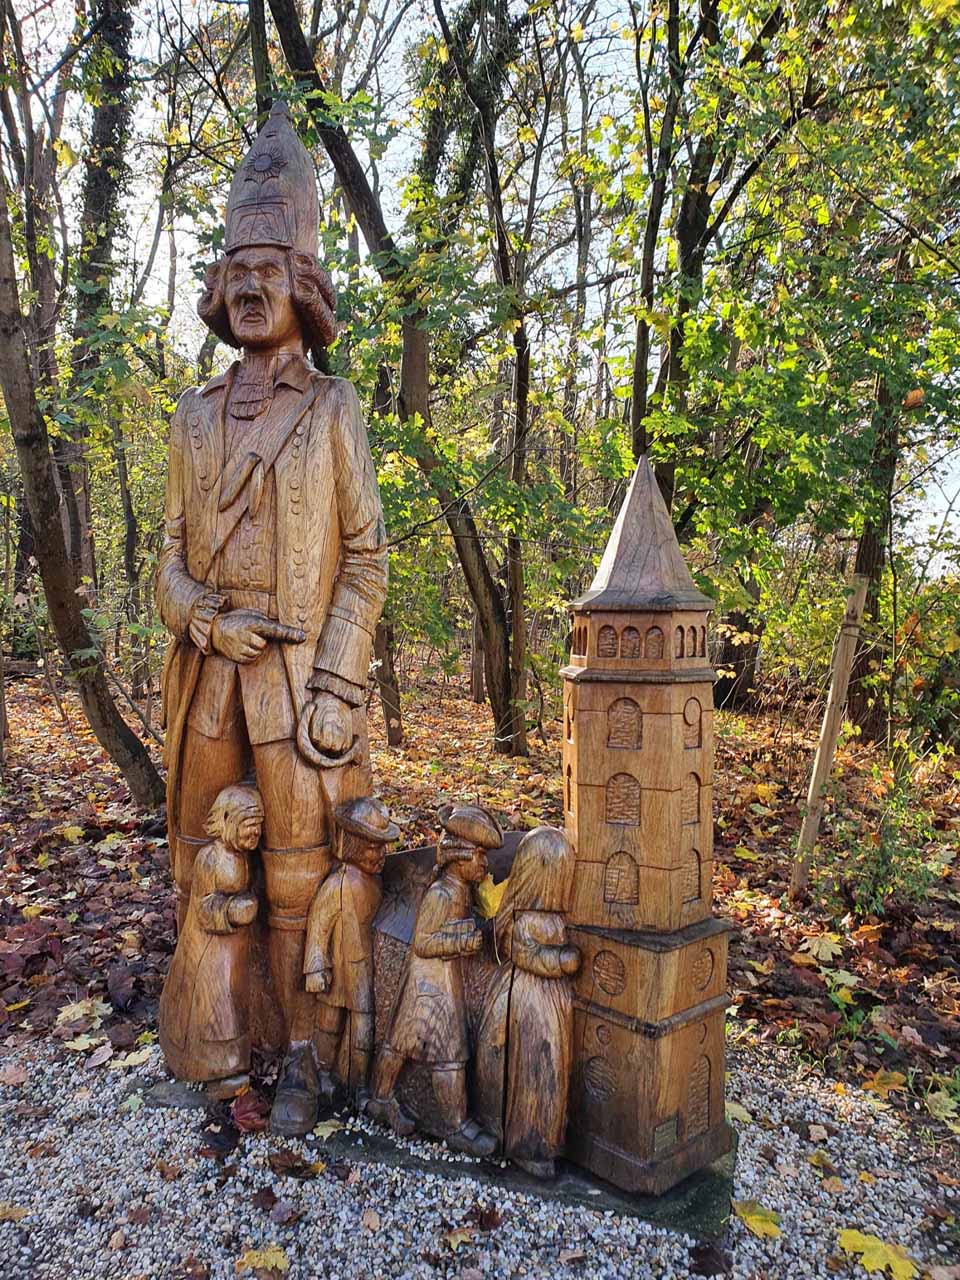 Holzfigur "Langer Kerl" auf dem Skulpturenpfad Königs Wusterhausen